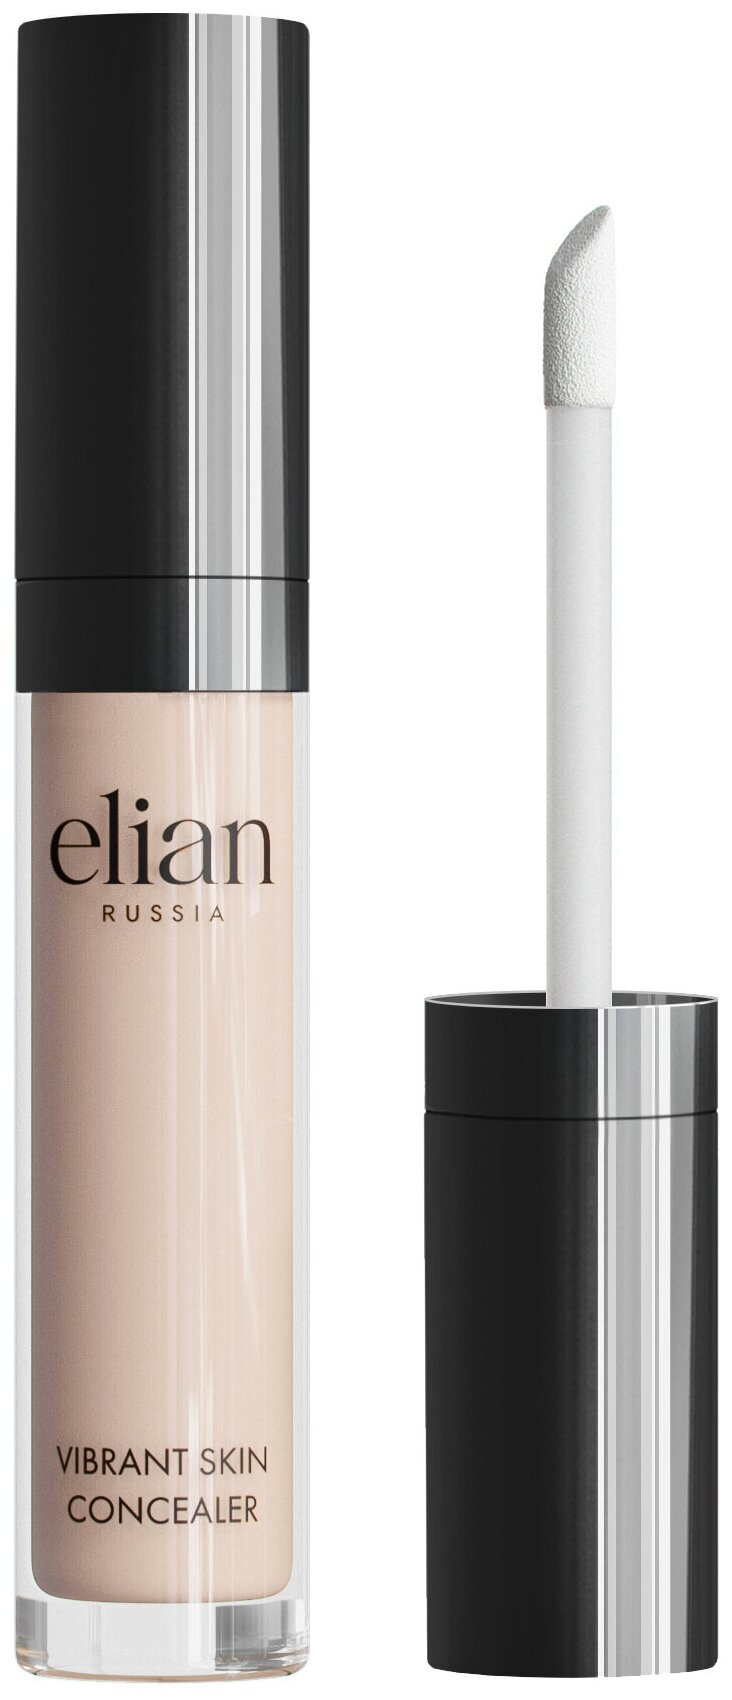   Vibrant Skin Concealer, Elian Russia (02 Light)